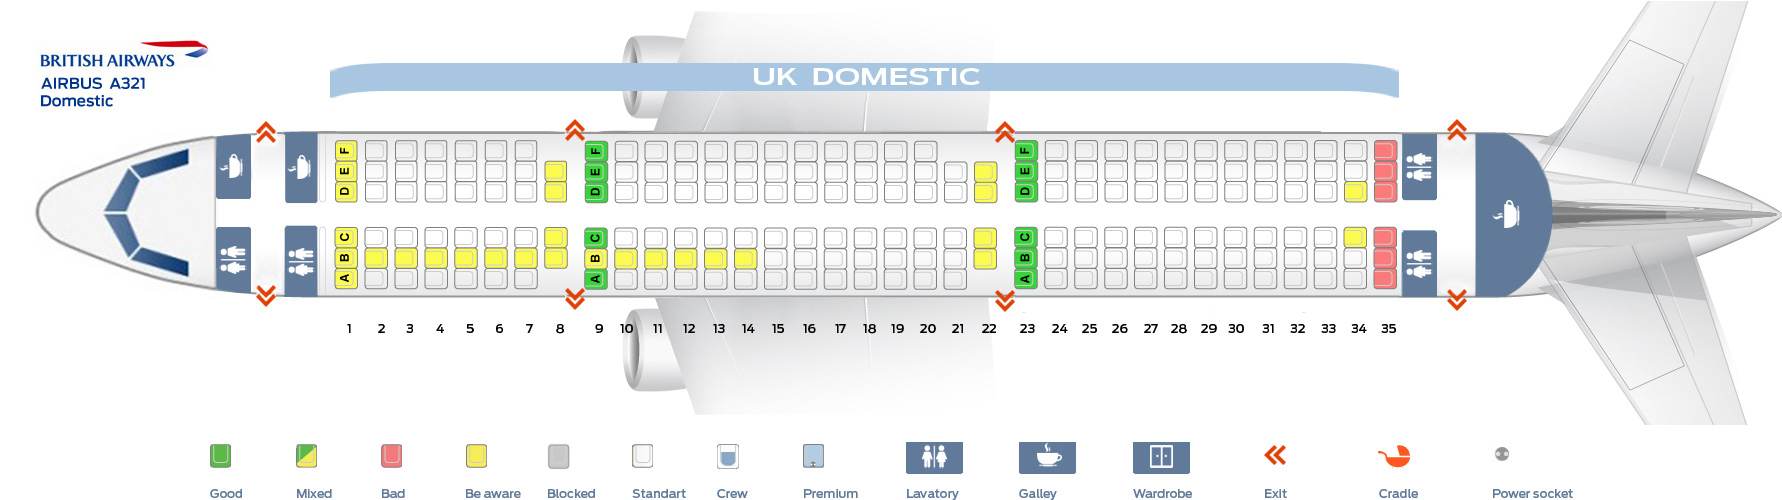 Seat map Airbus A321200 British Airways. Best seats in plane